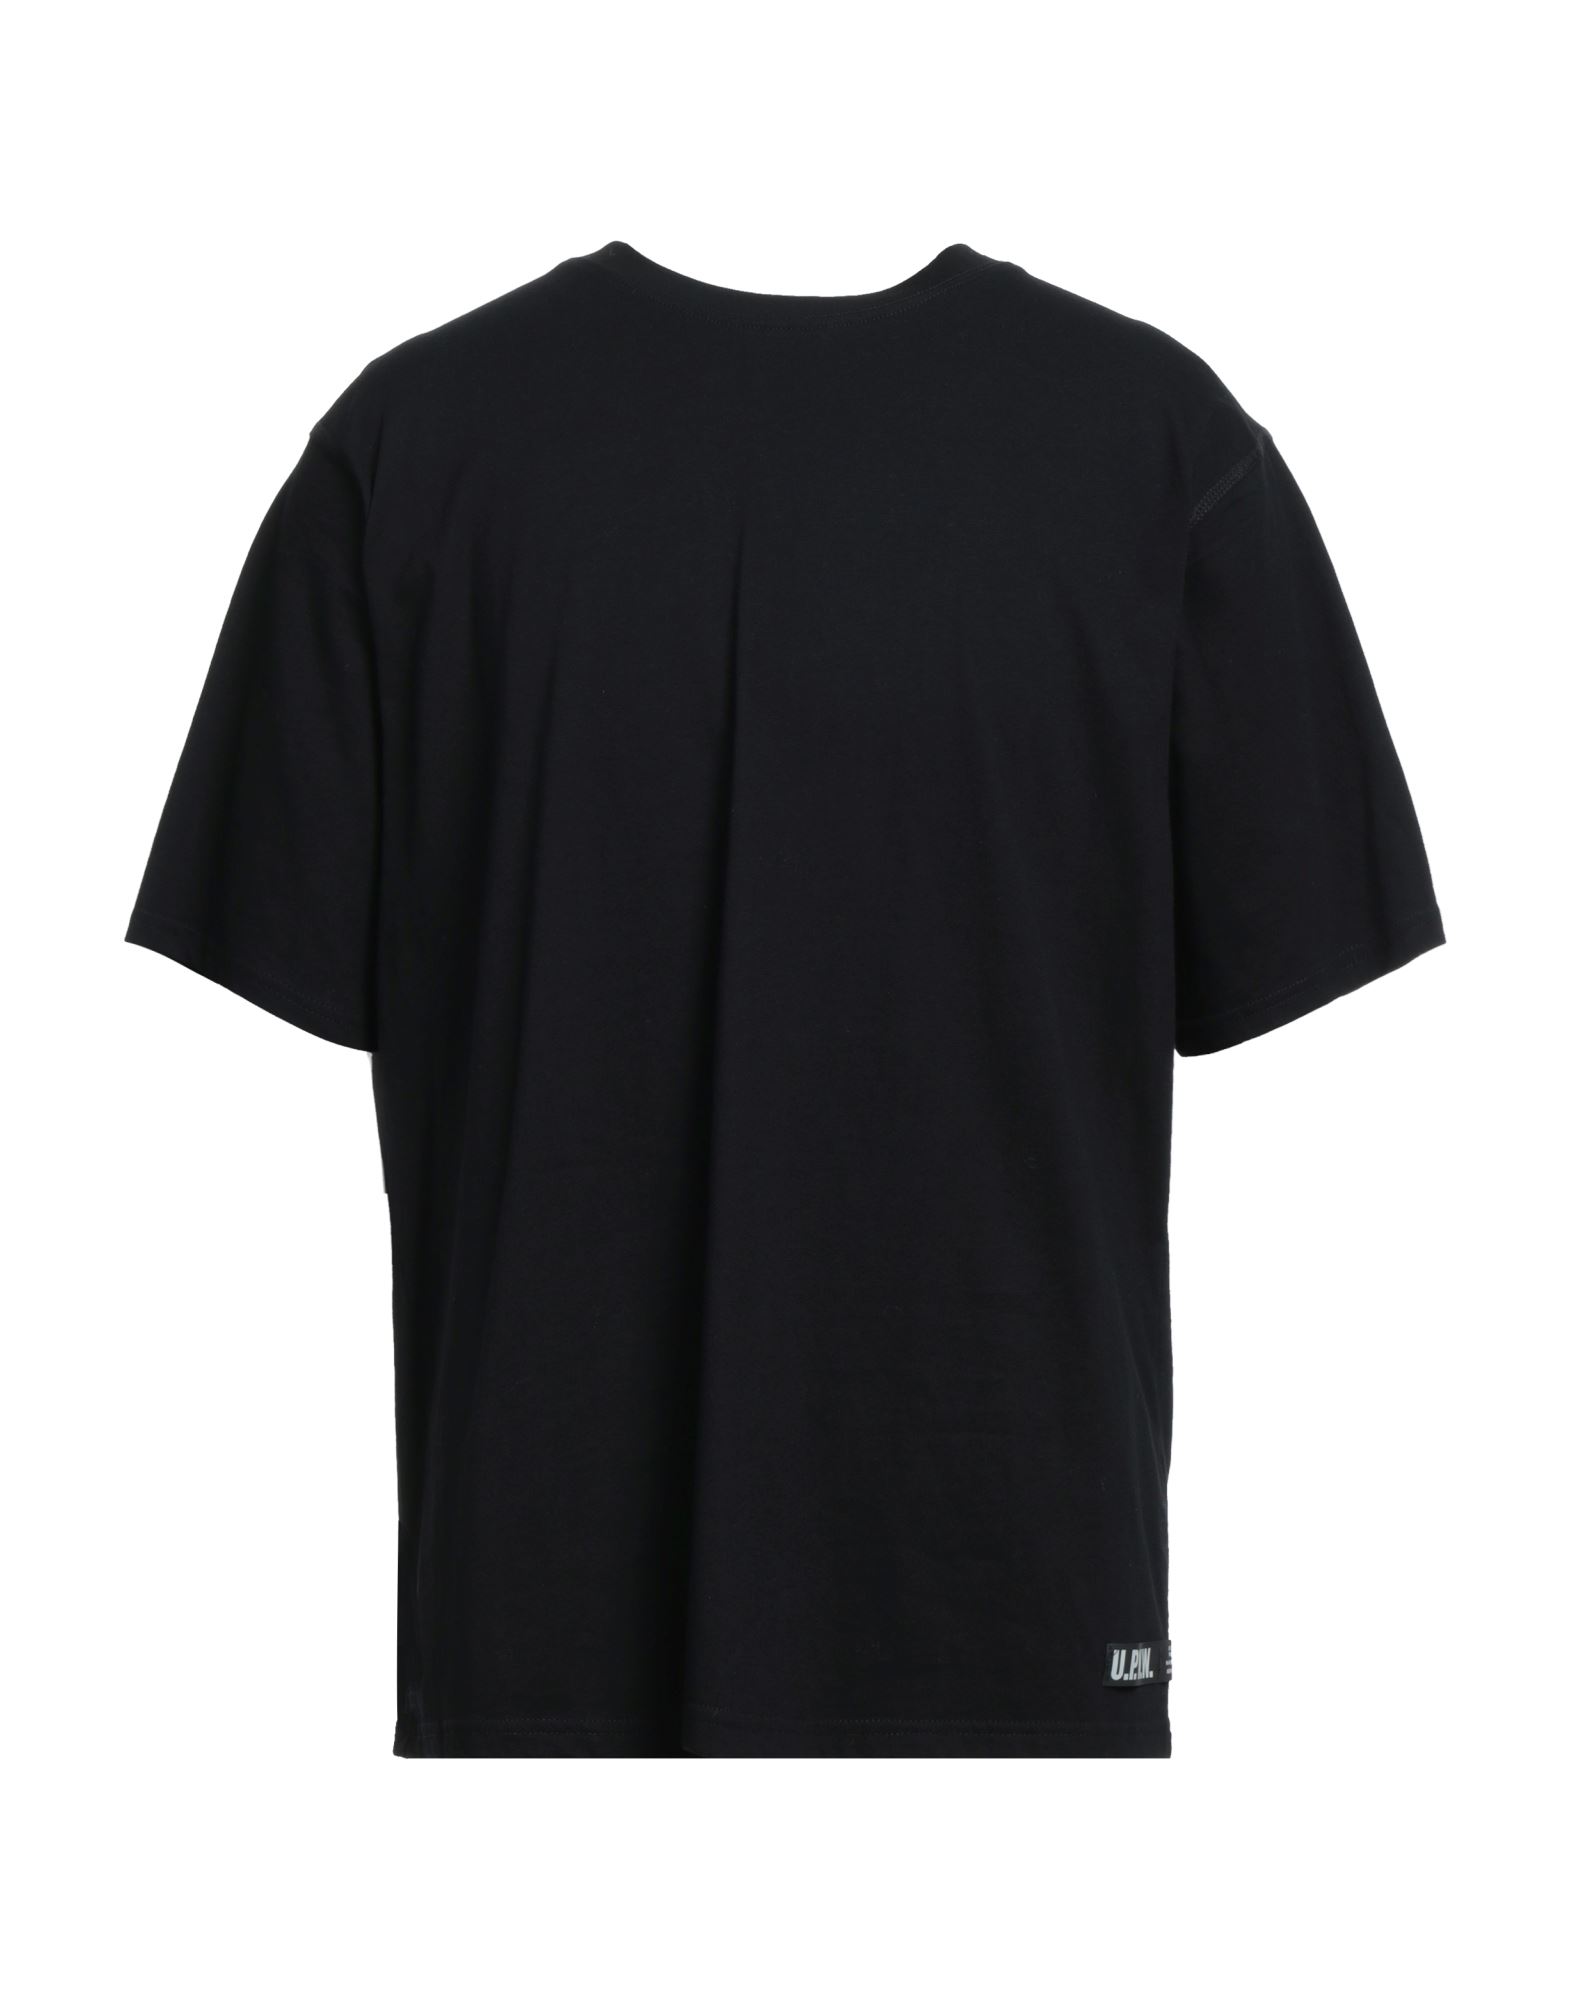 Upww T-shirts In Black